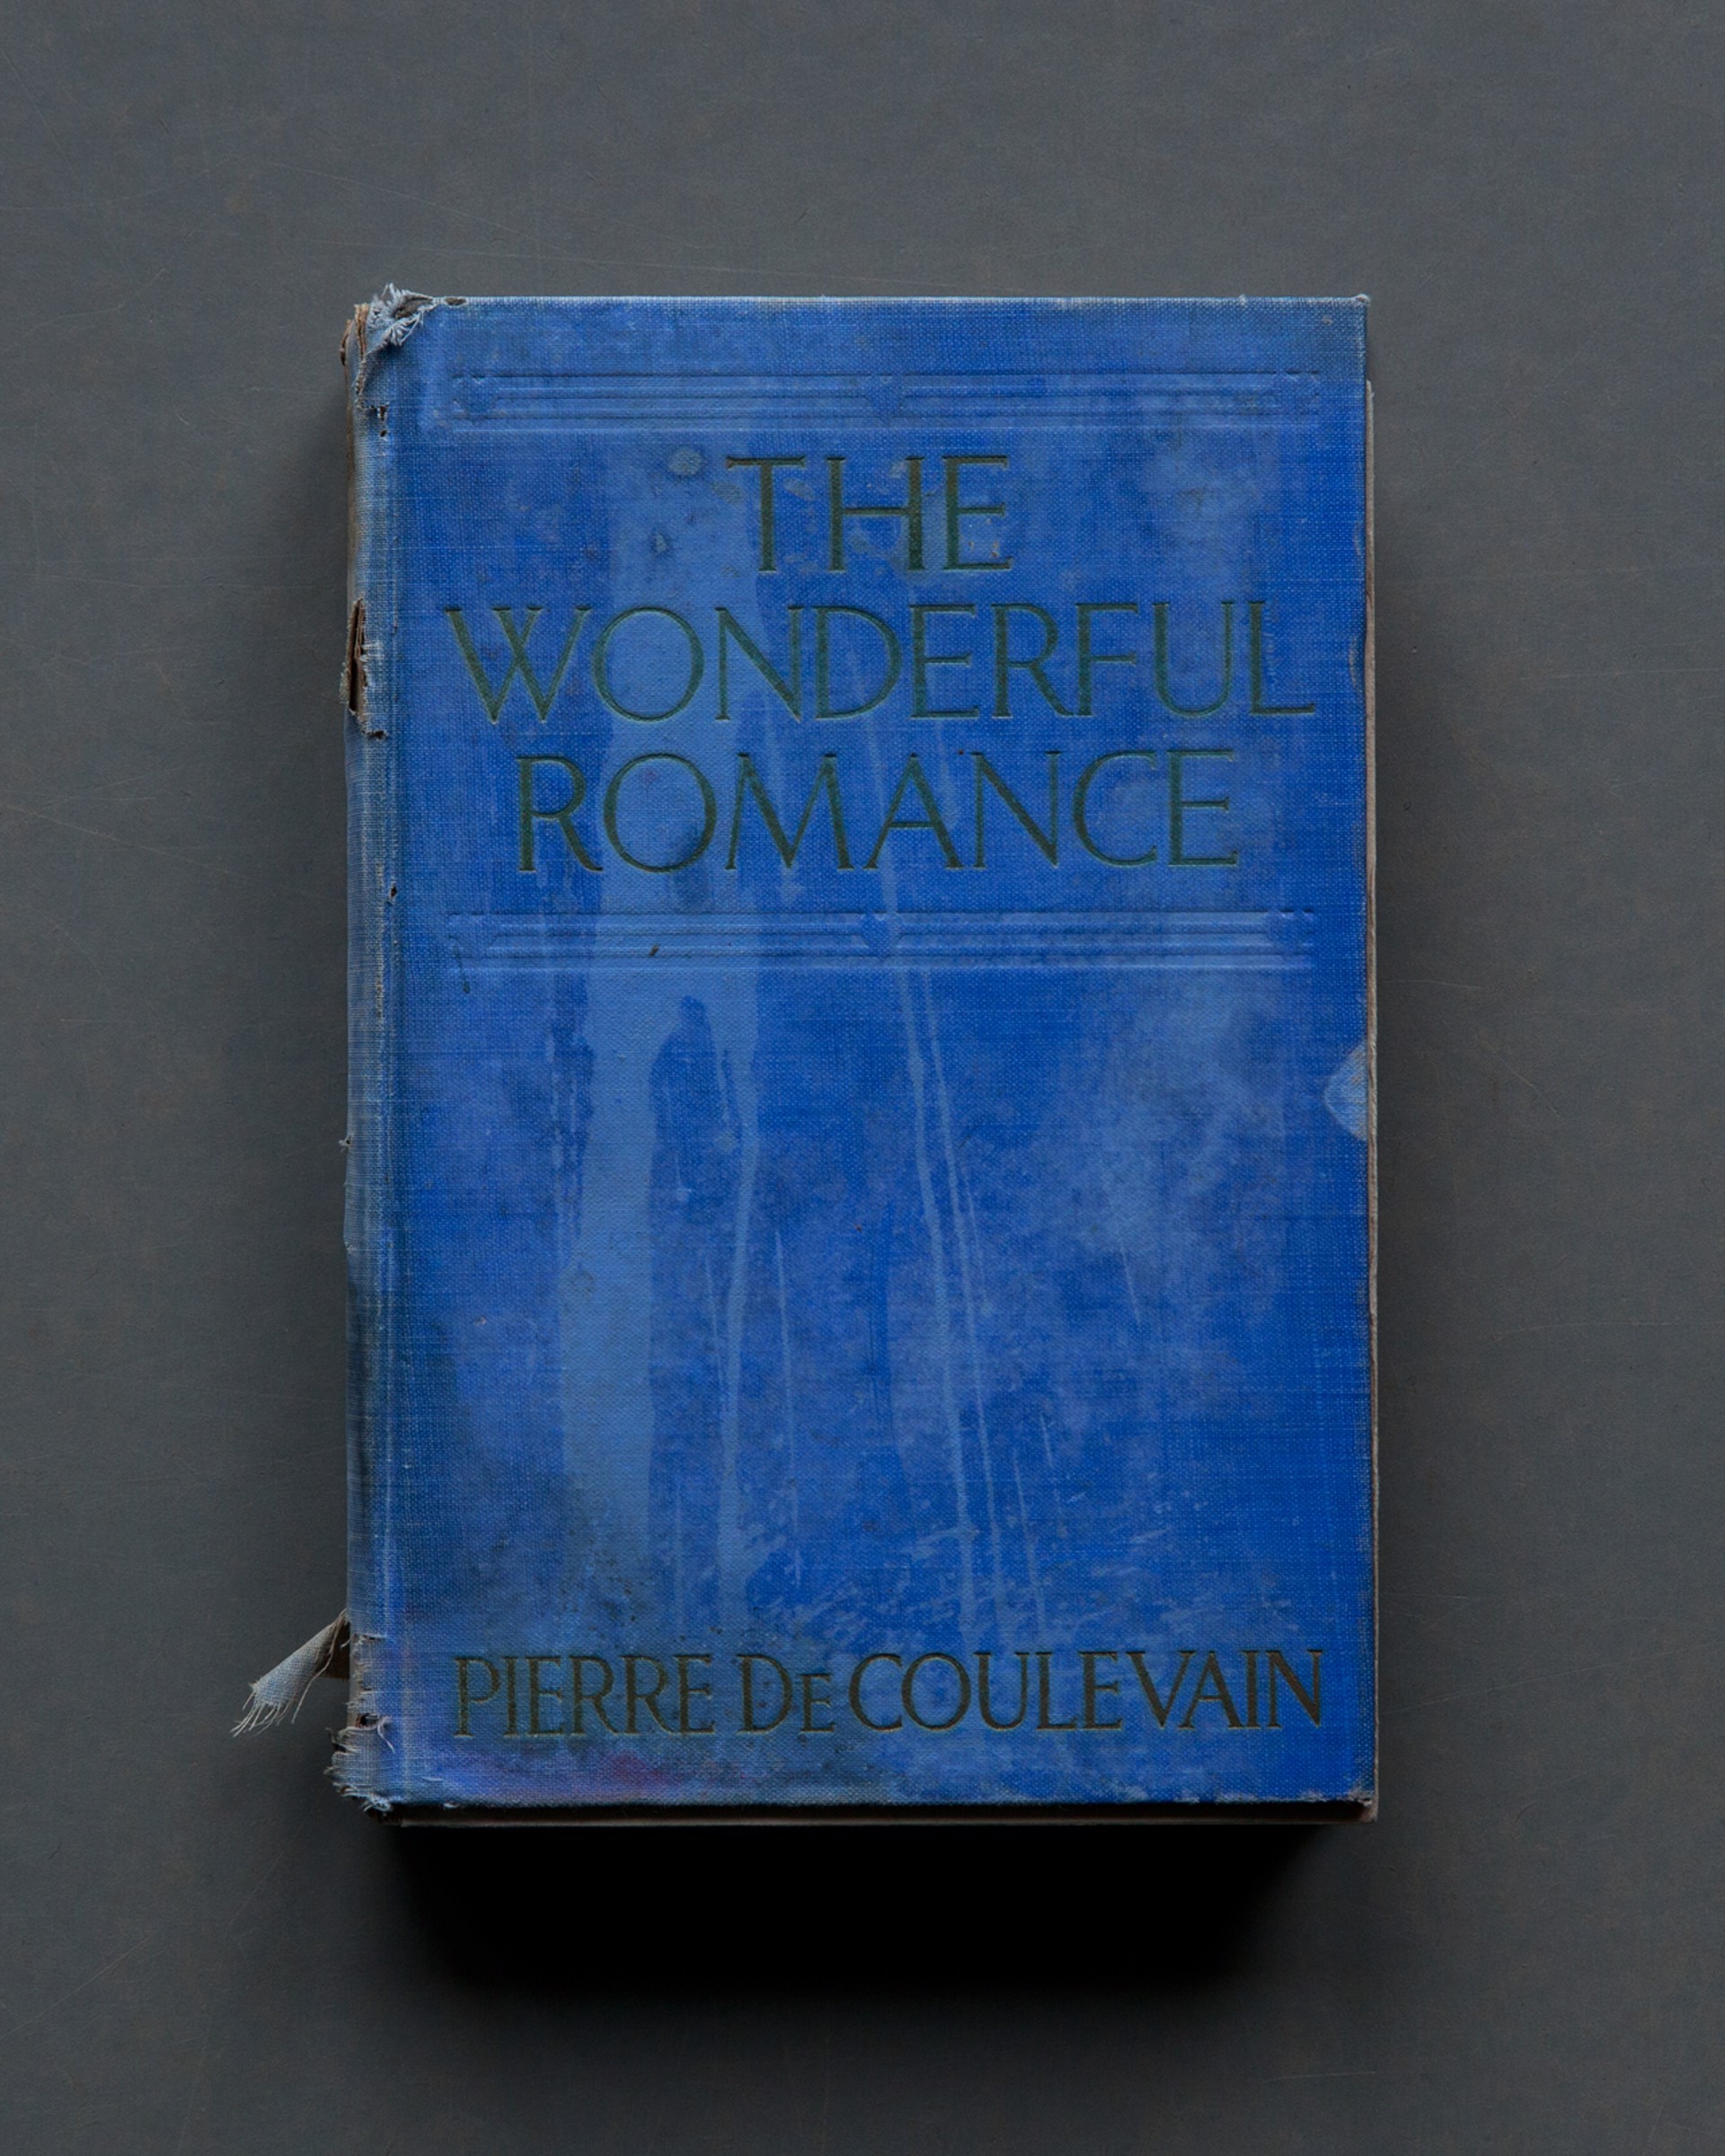 The Wonderful Romance by Mary Ellen Bartley